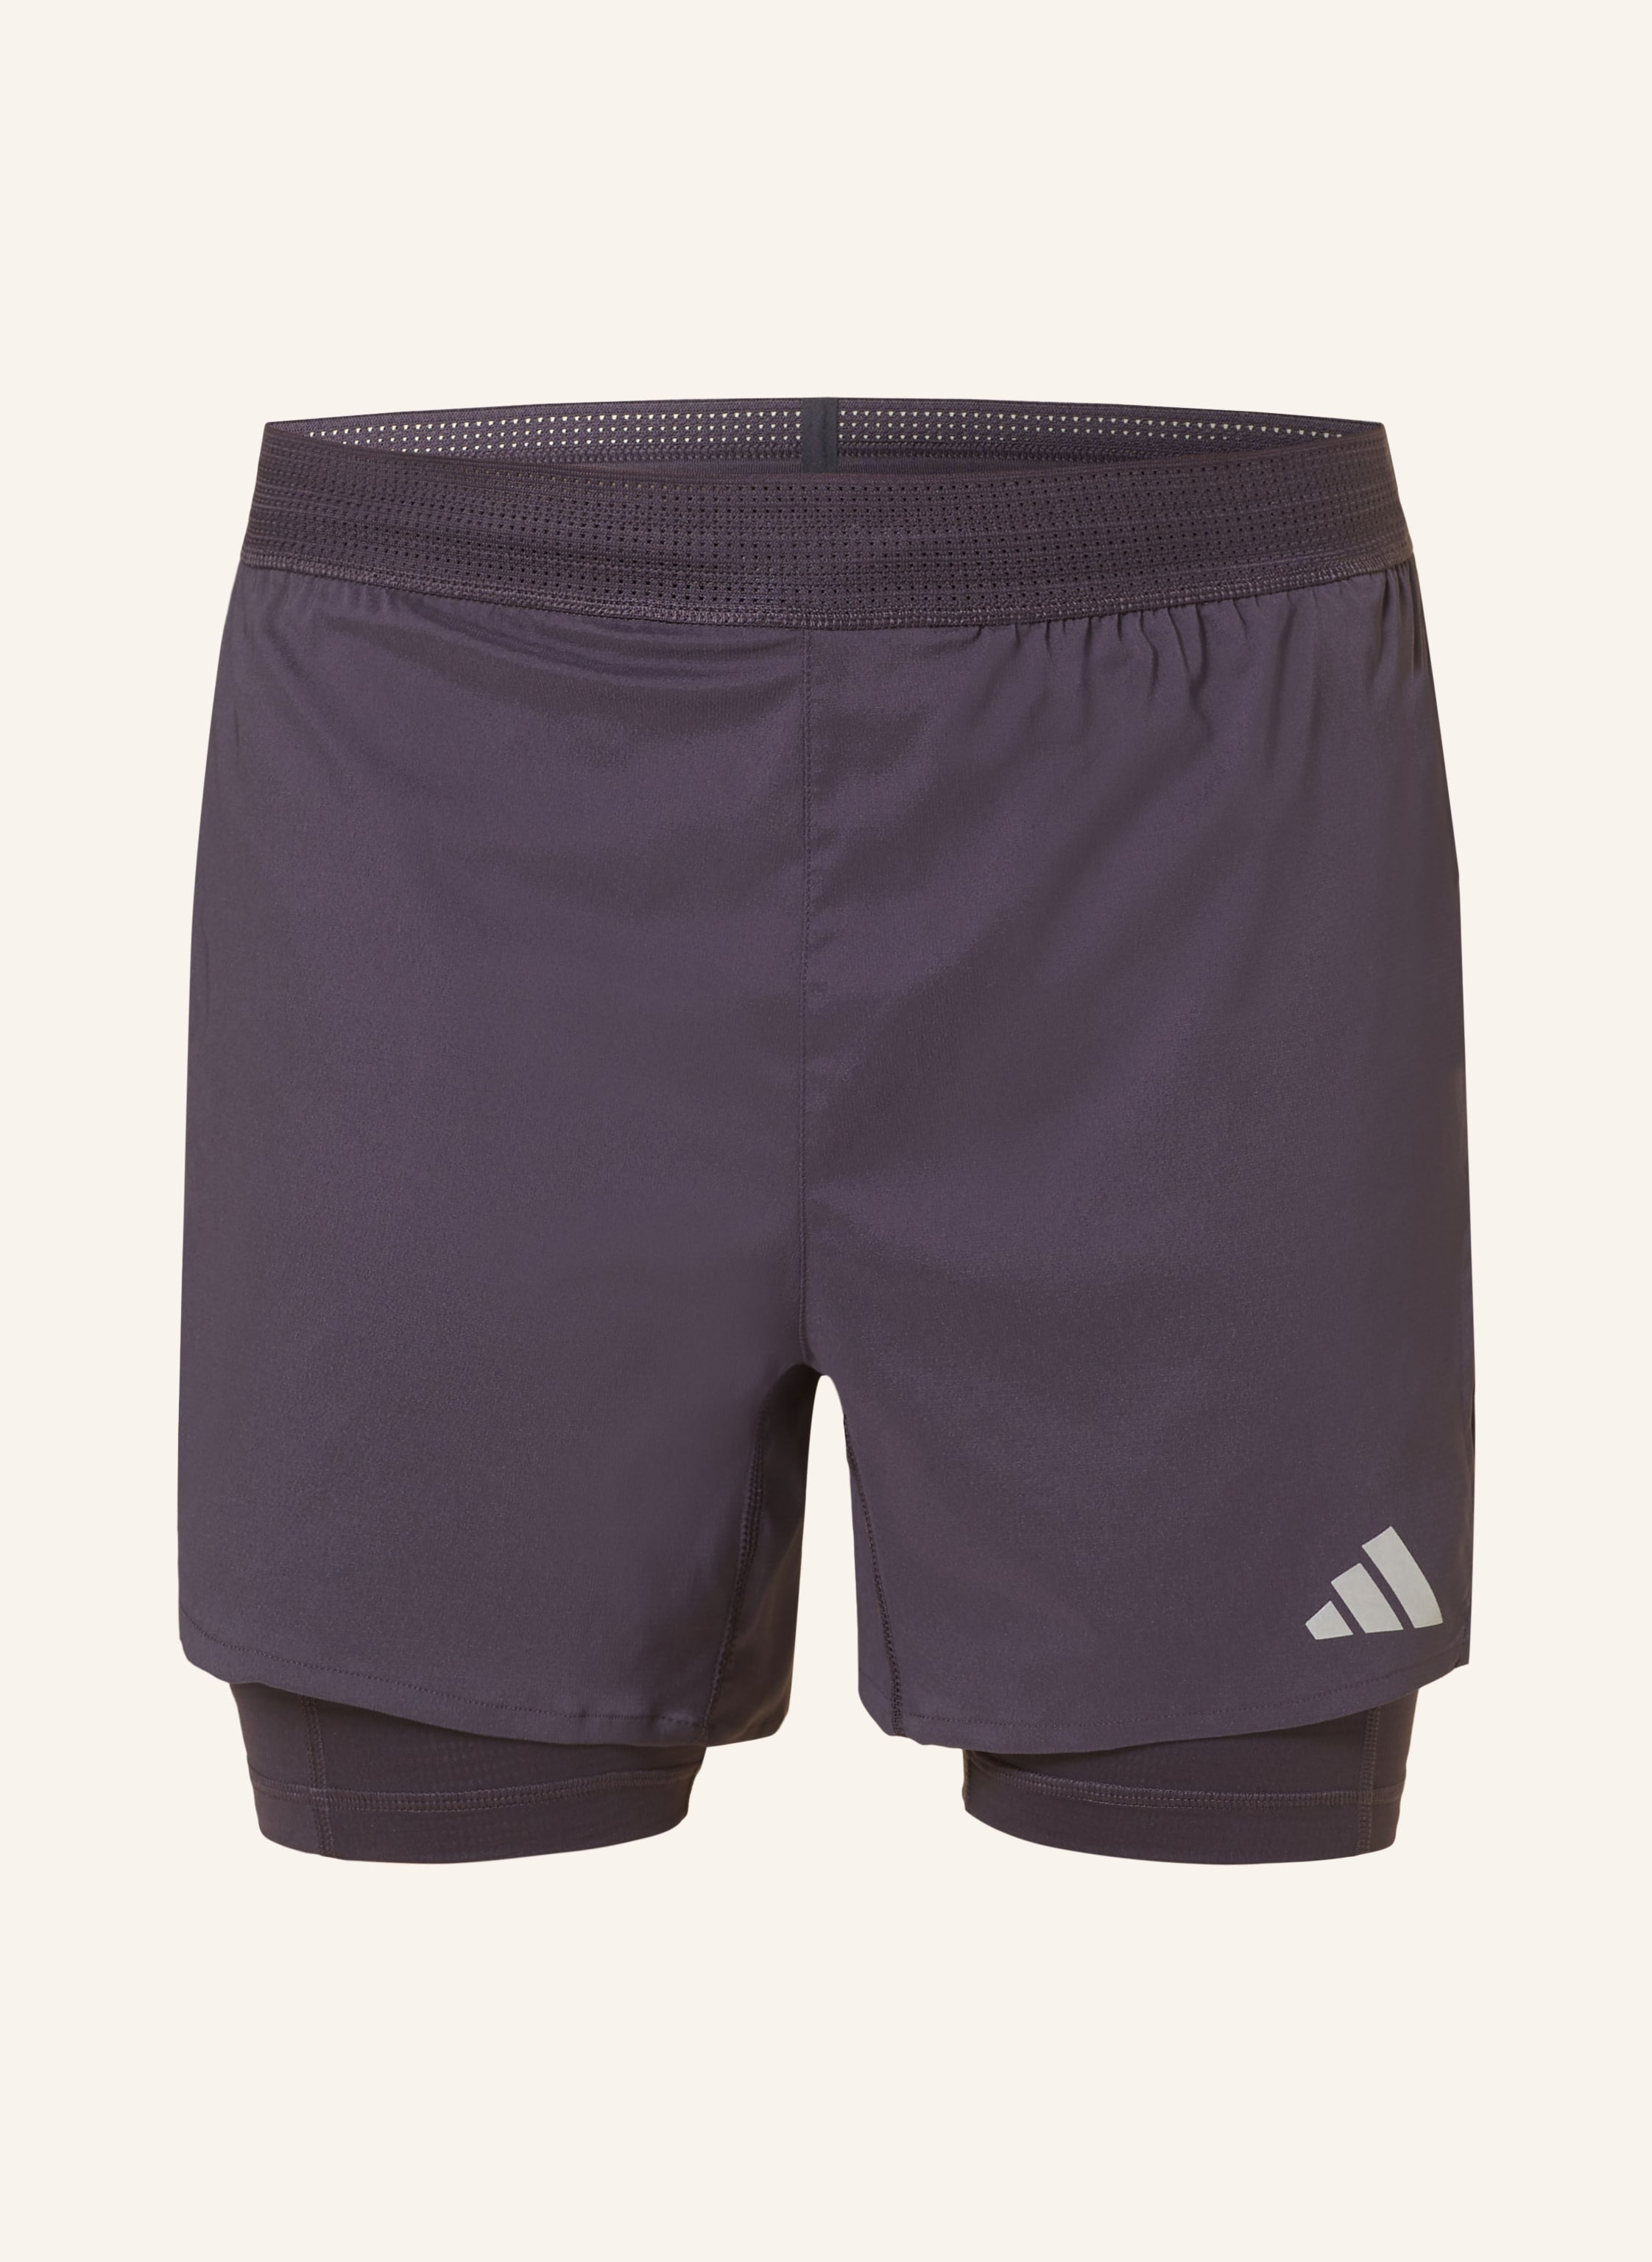 adidas 2-in-1 training shorts HIIT HEAT.RDY in dark gray